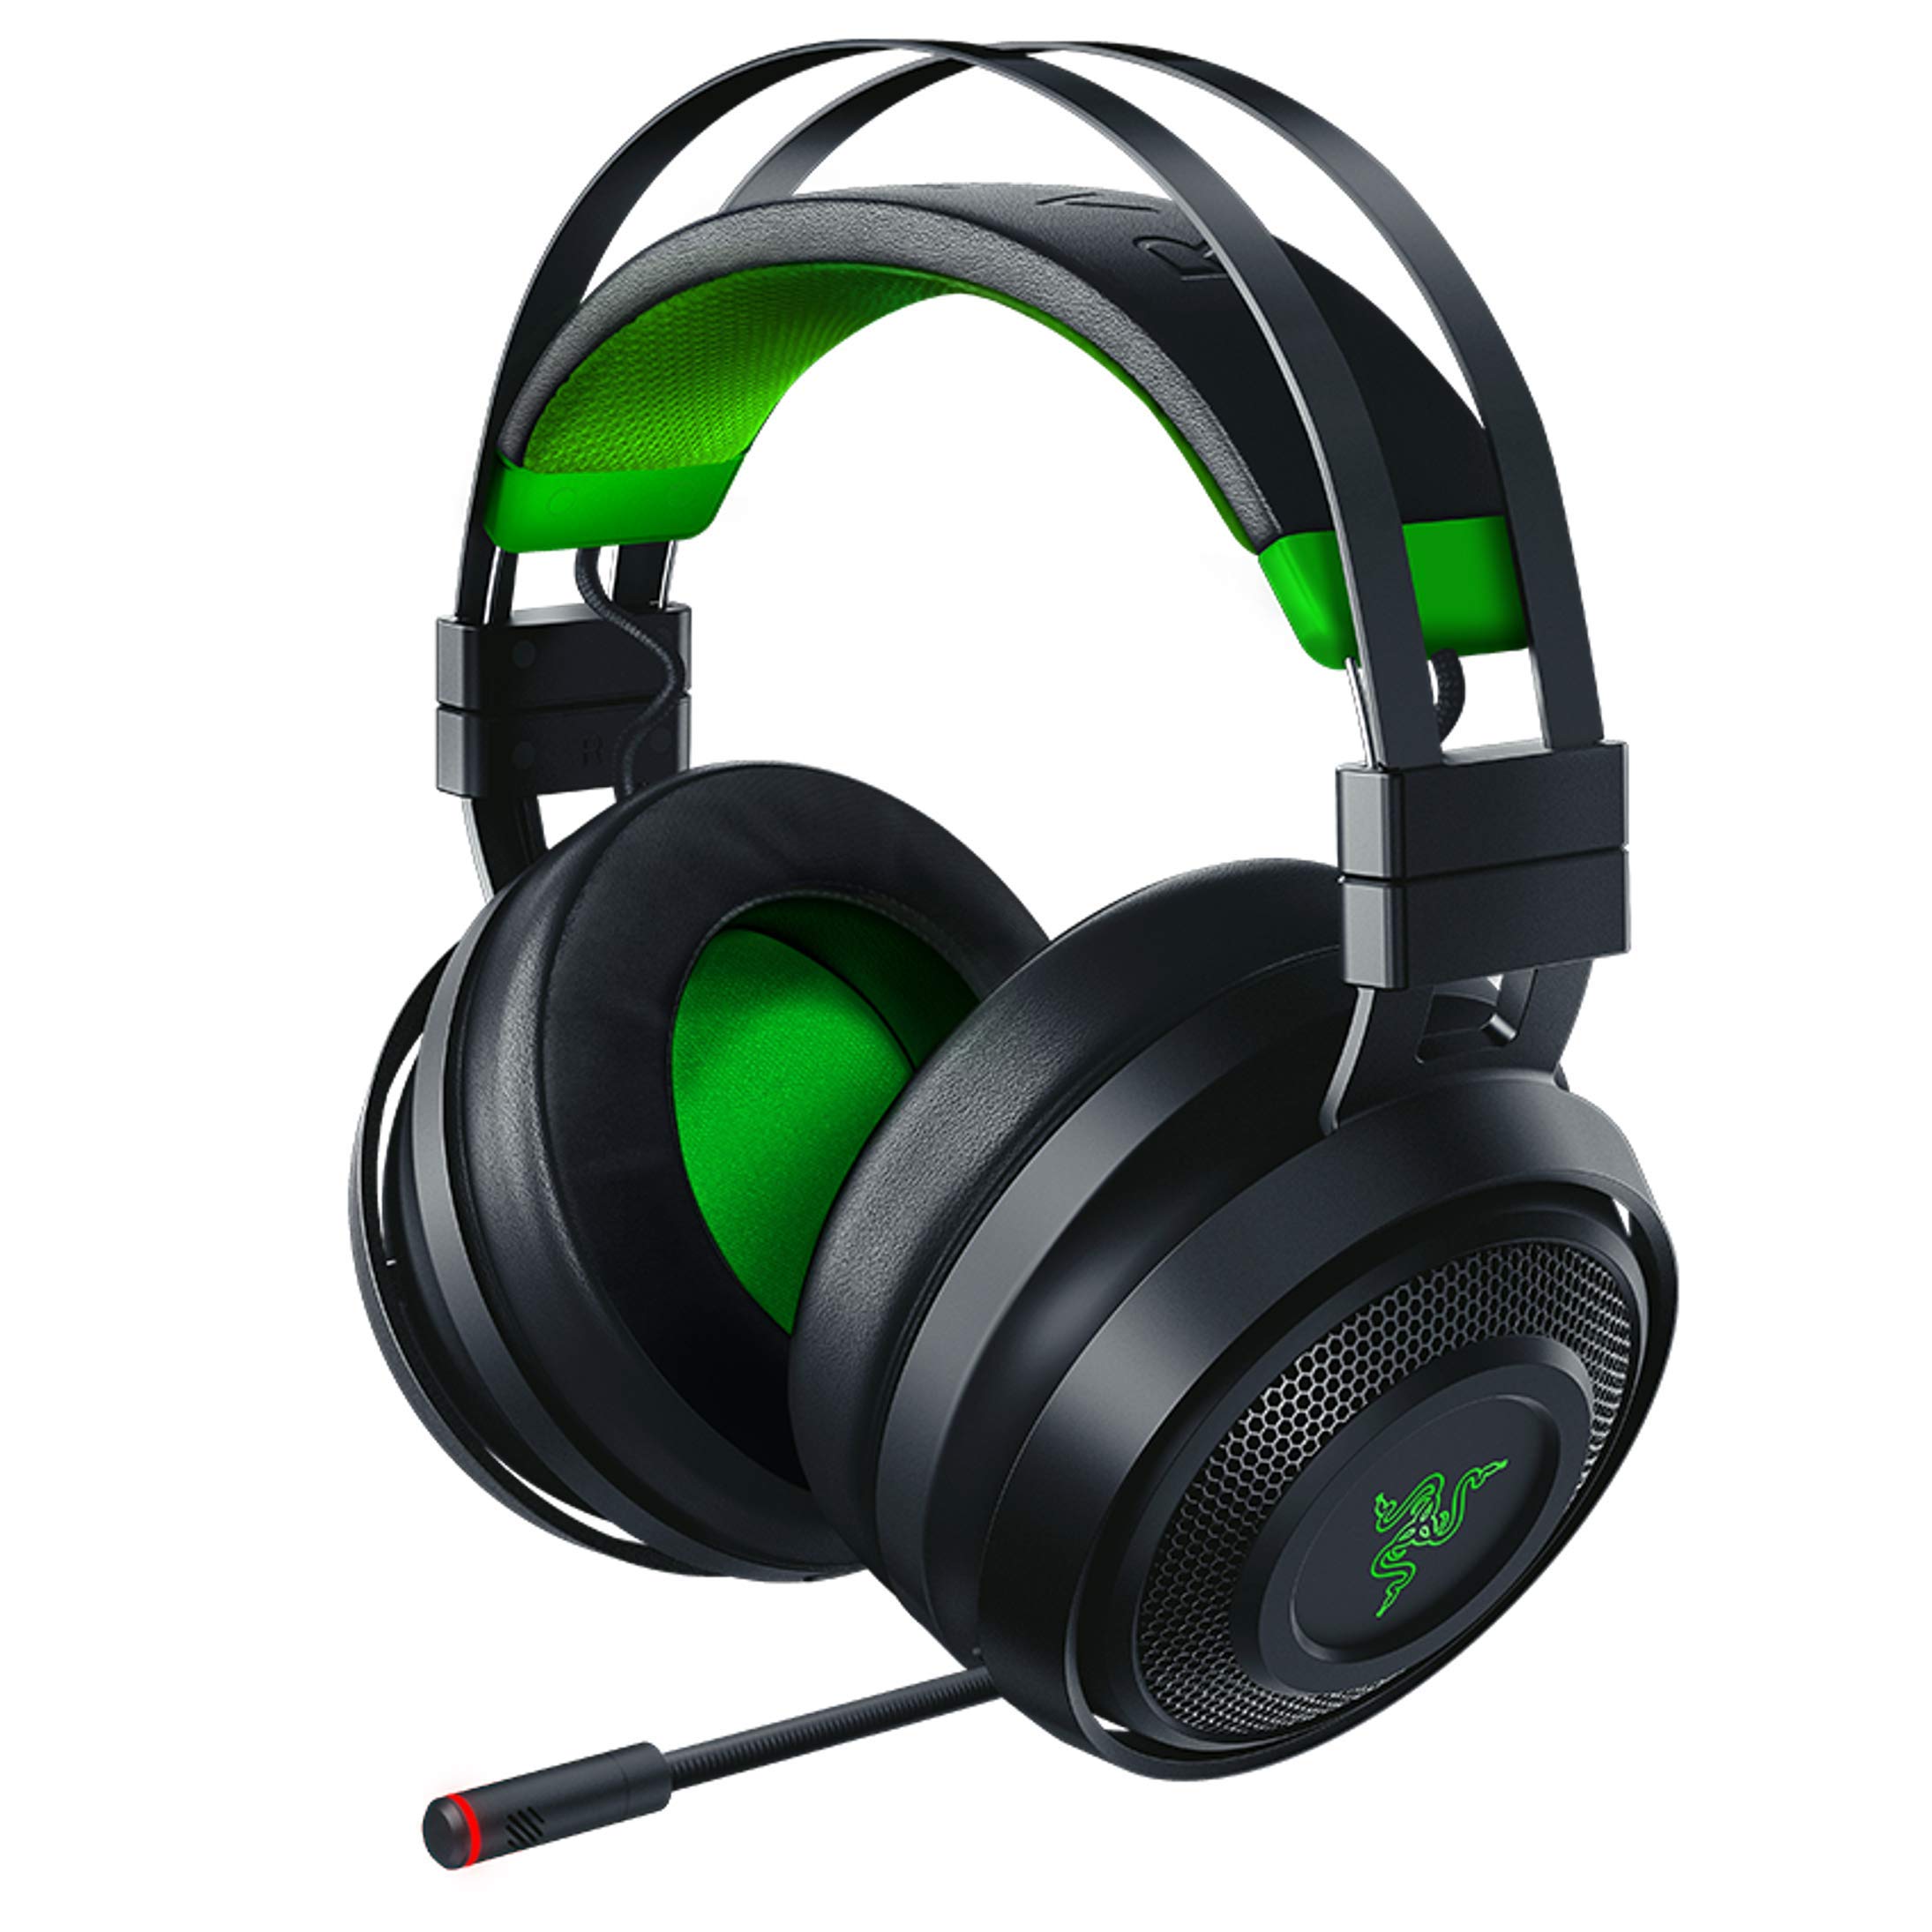 Razer Nari Ultimate for Xbox One Wireless 7.1 Surround Sound Gaming Headset: HyperSense Haptic Feedback - Auto-Adjust Headband - Retractable Mic – for Xbox One, Xbox Series X & S - Black/Green